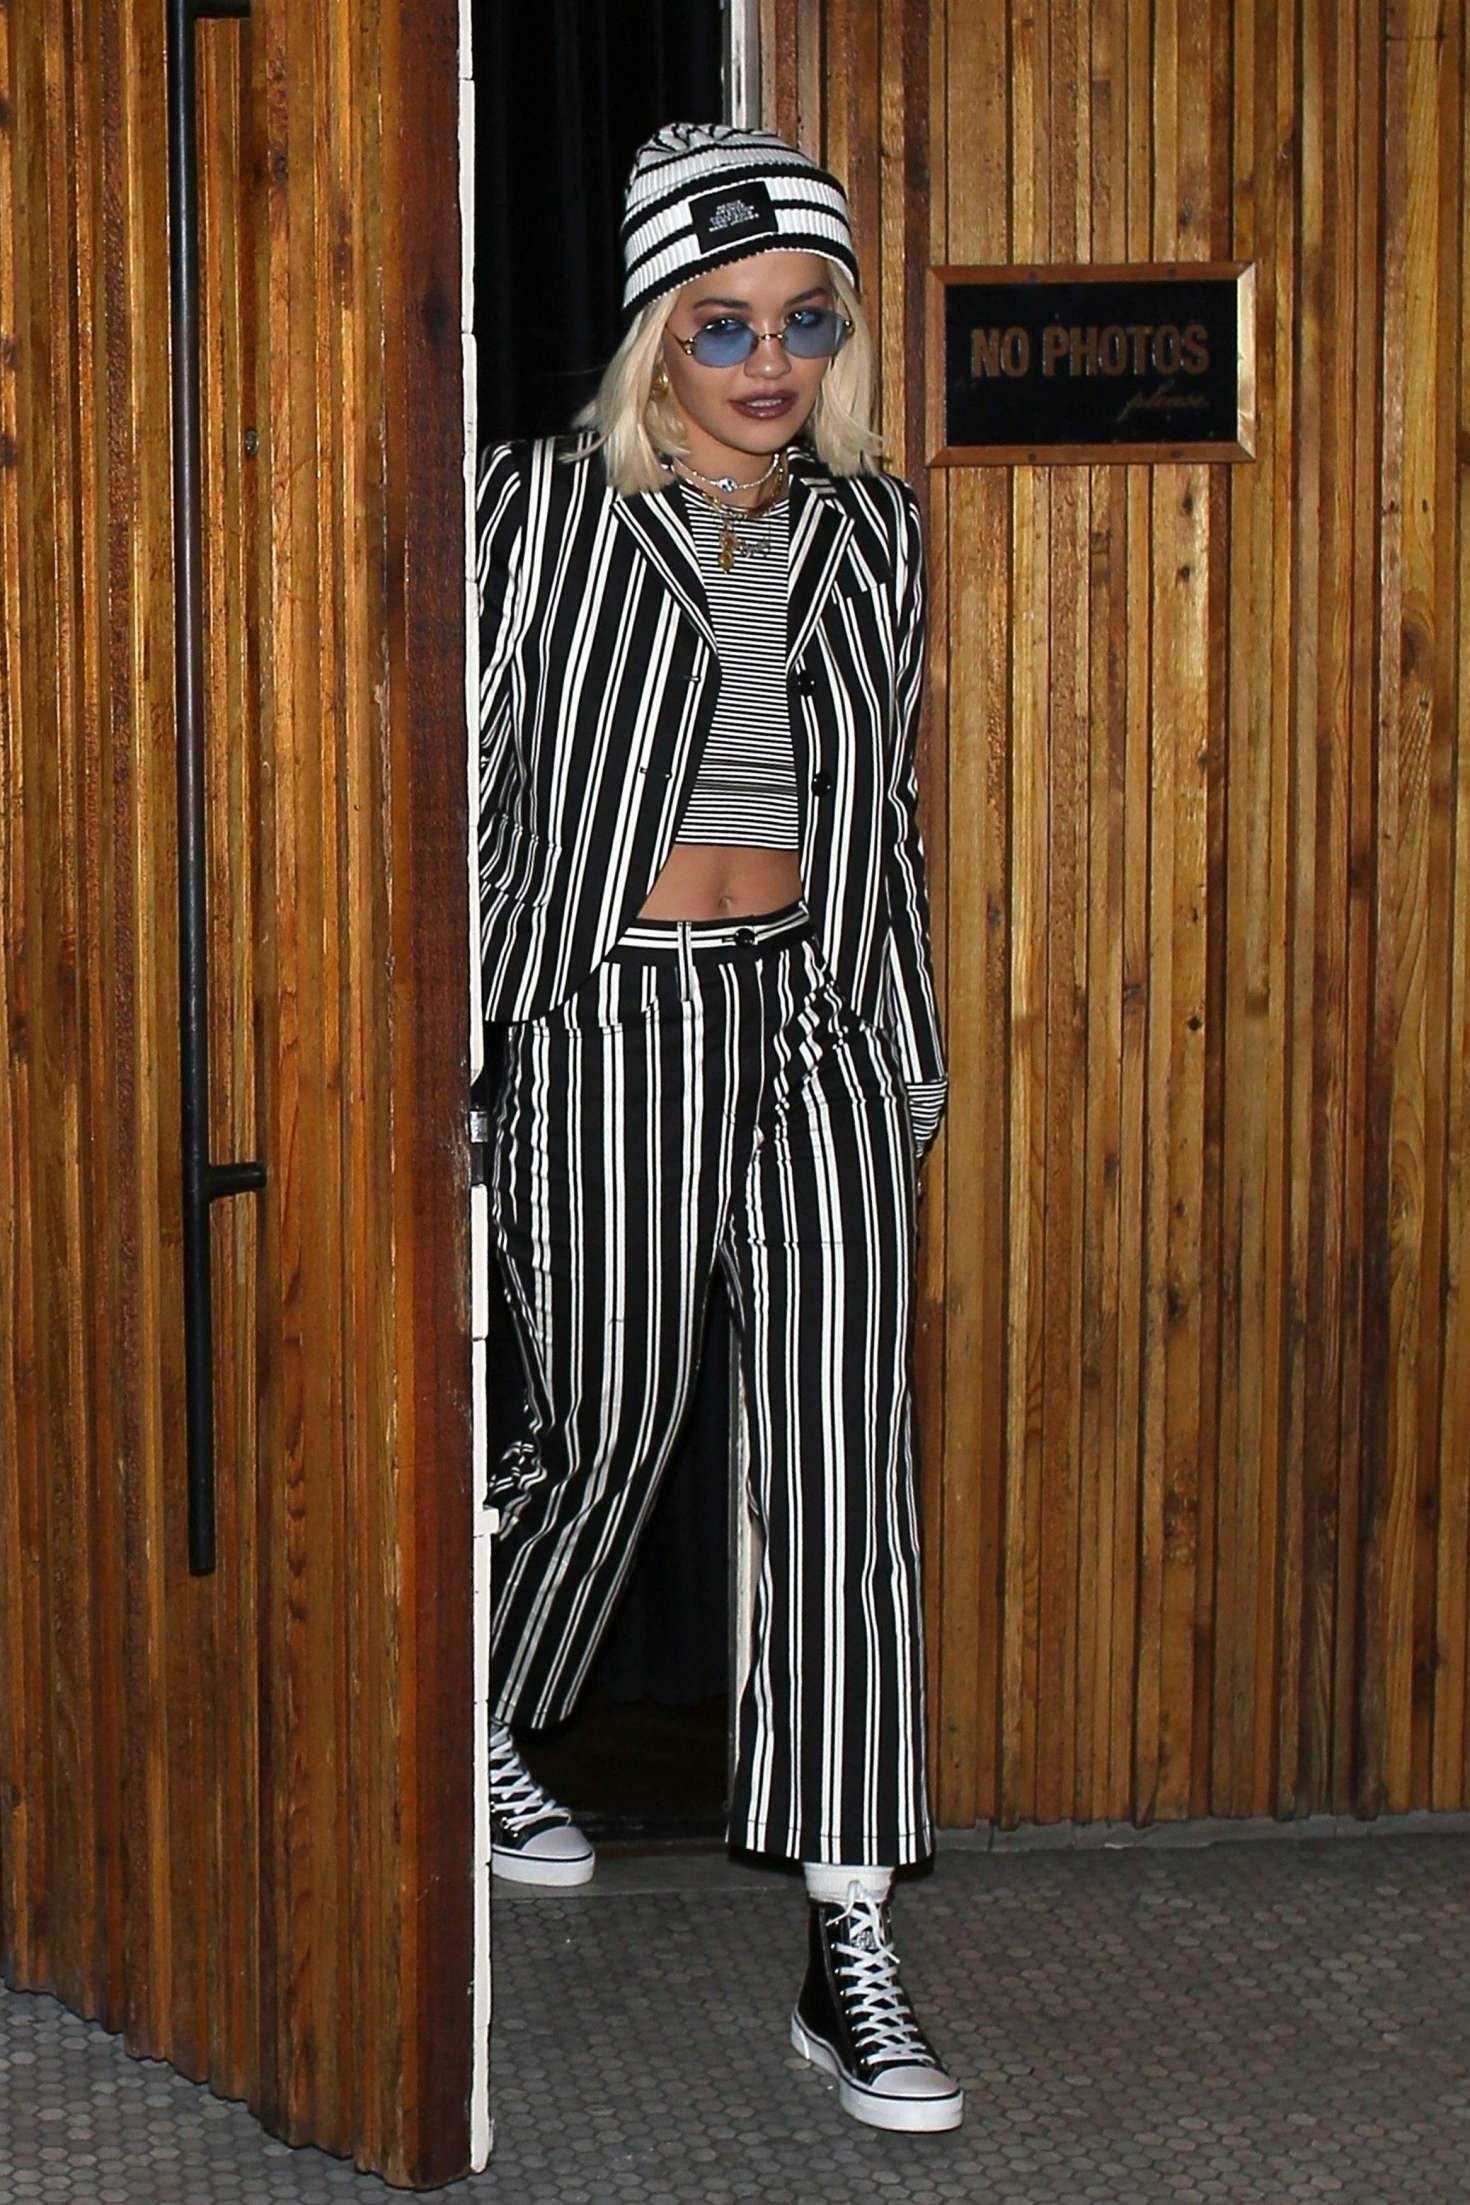 Rita Ora â€“ Leaving The Nice Guy restaurant in West Hollywood